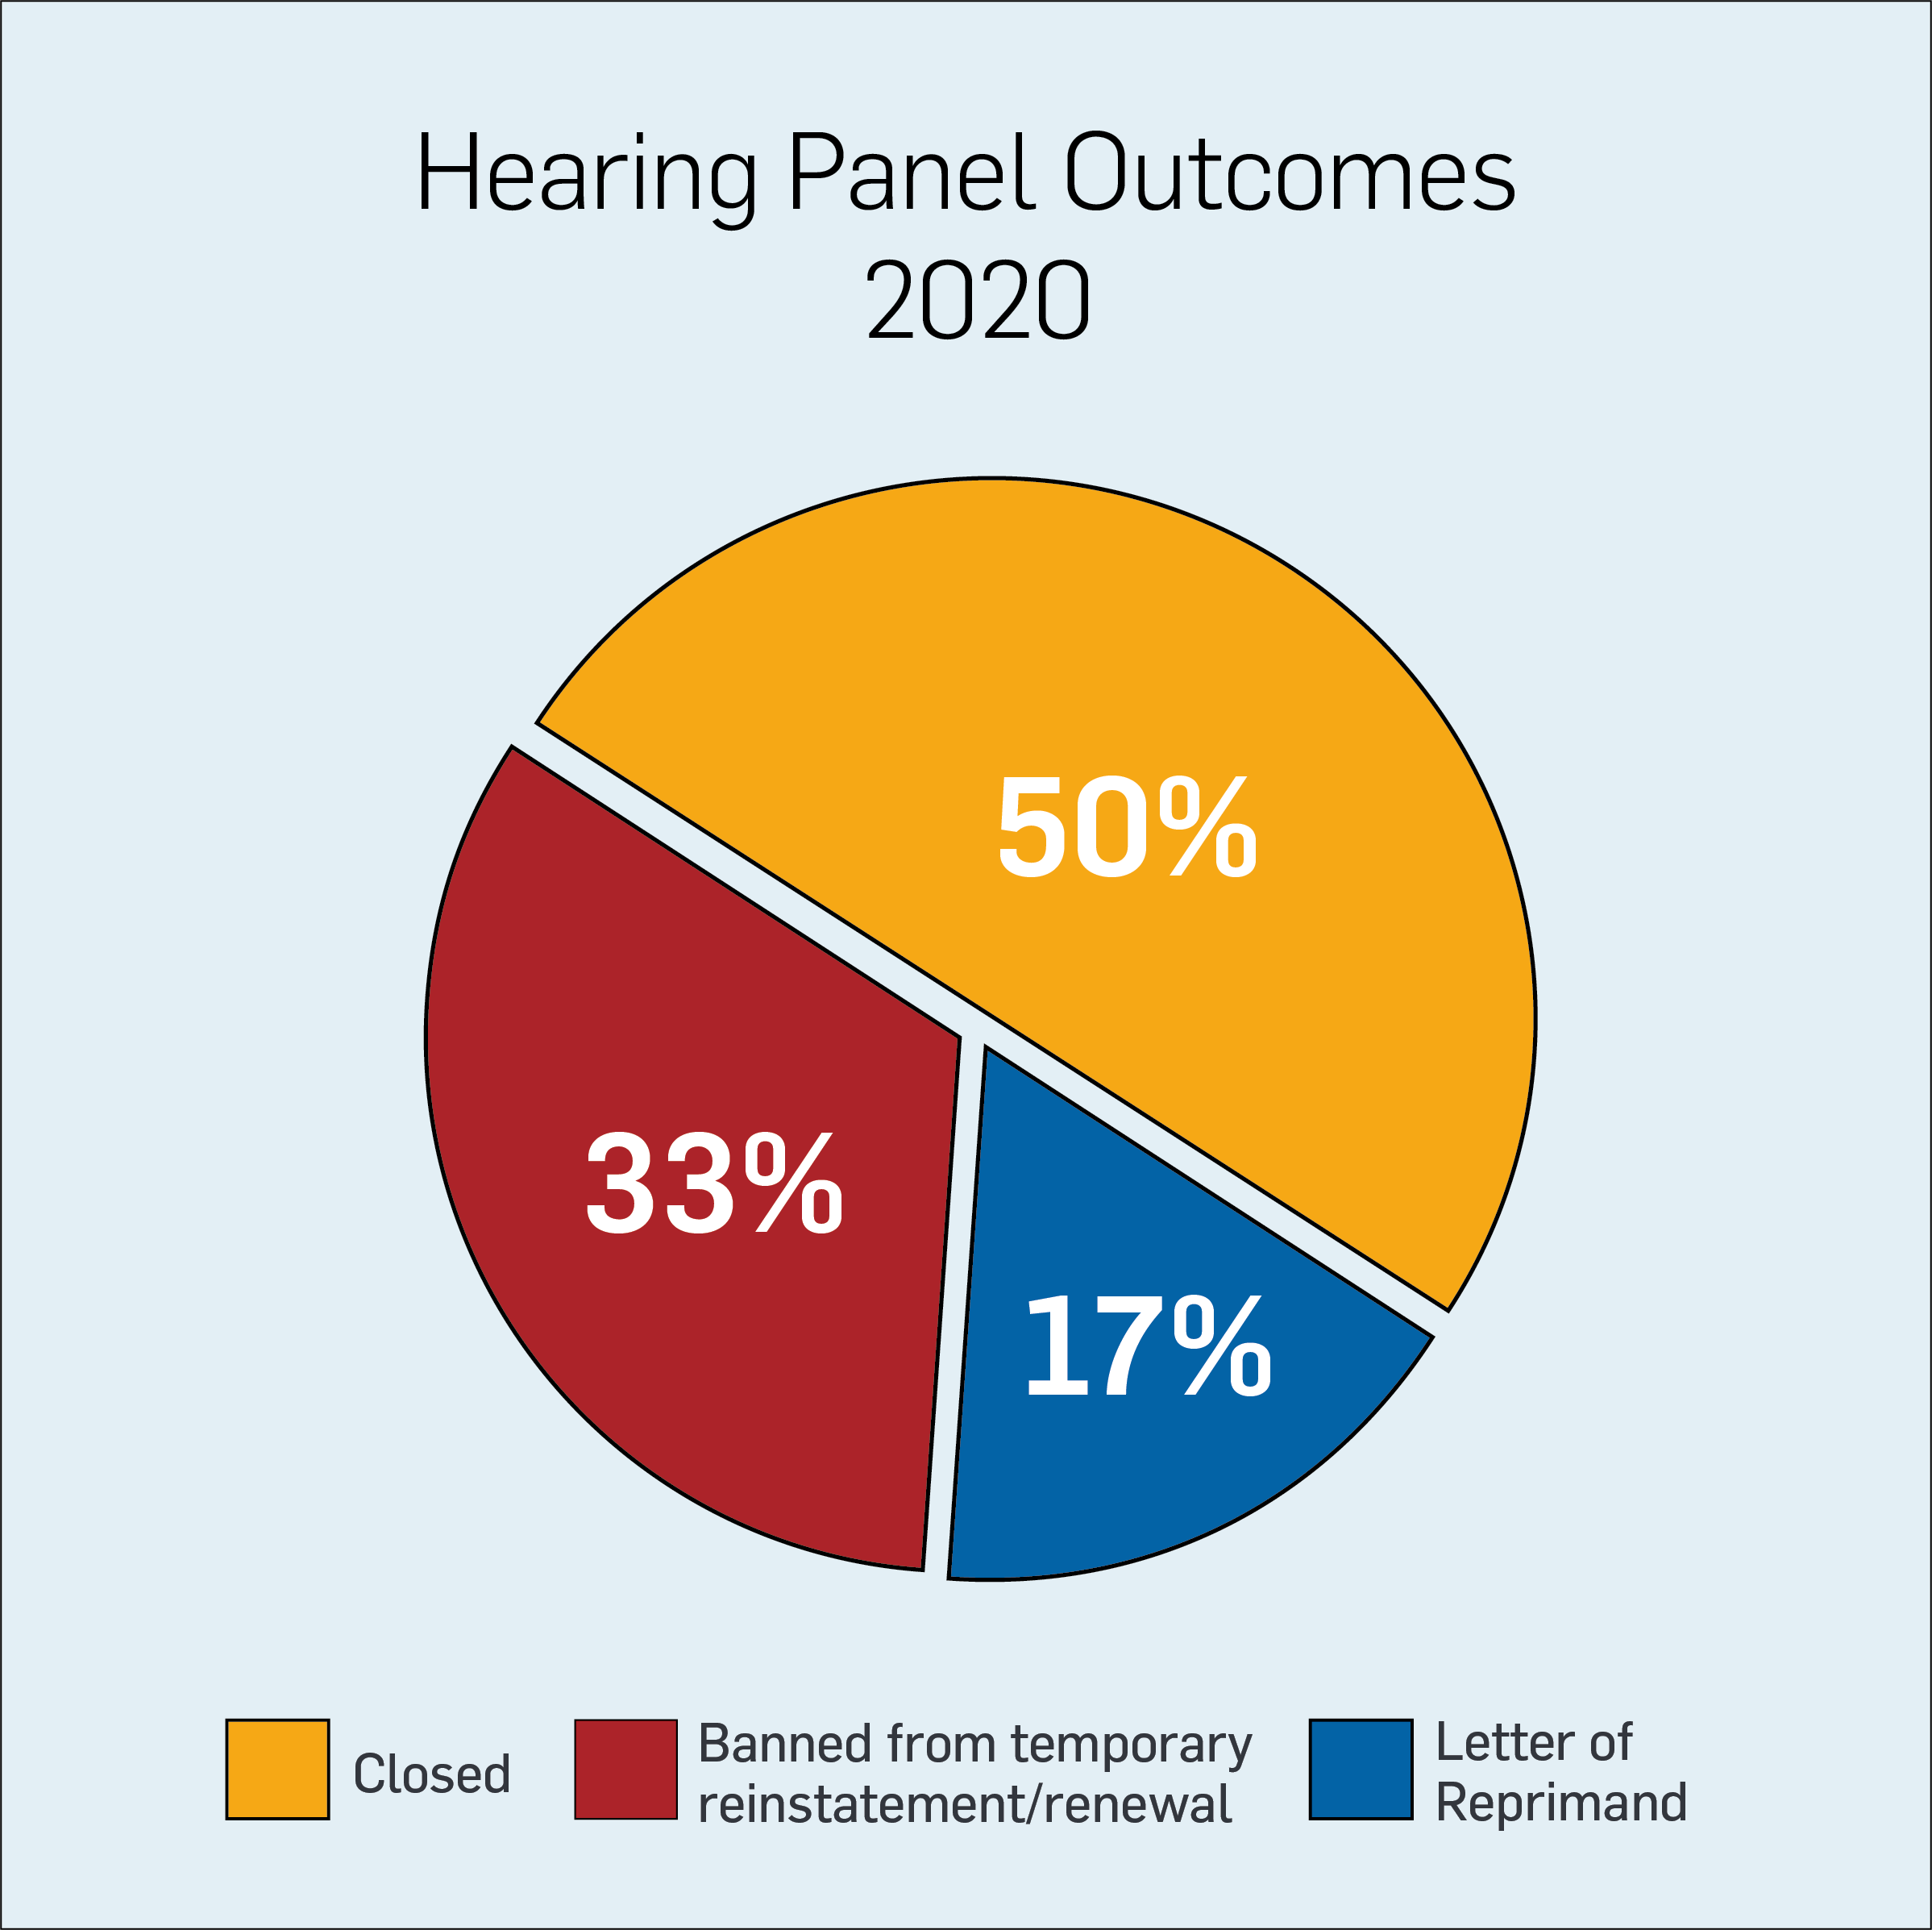  Hearing Panel Outcomes 2020 graph